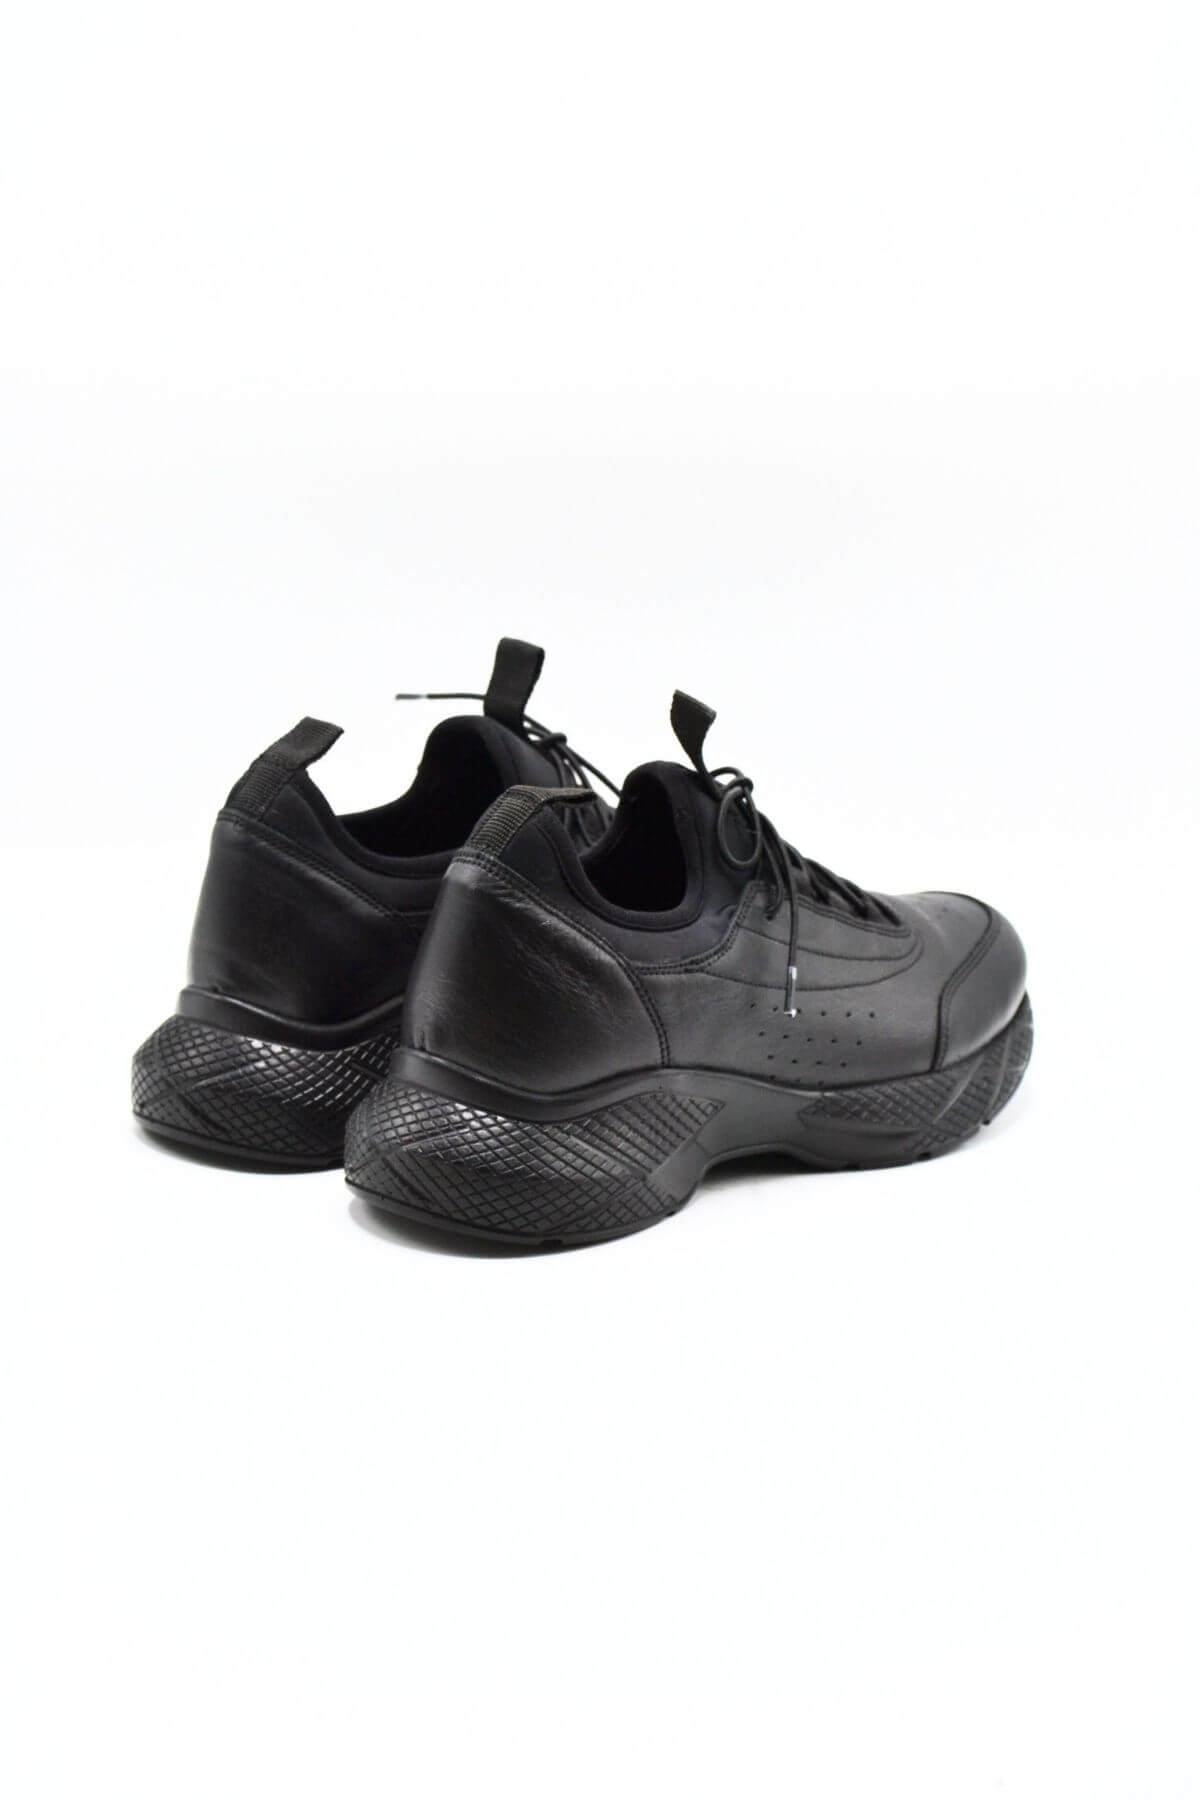 Kadın Airflow Deri Sneakers Siyah 2216603Y - Thumbnail